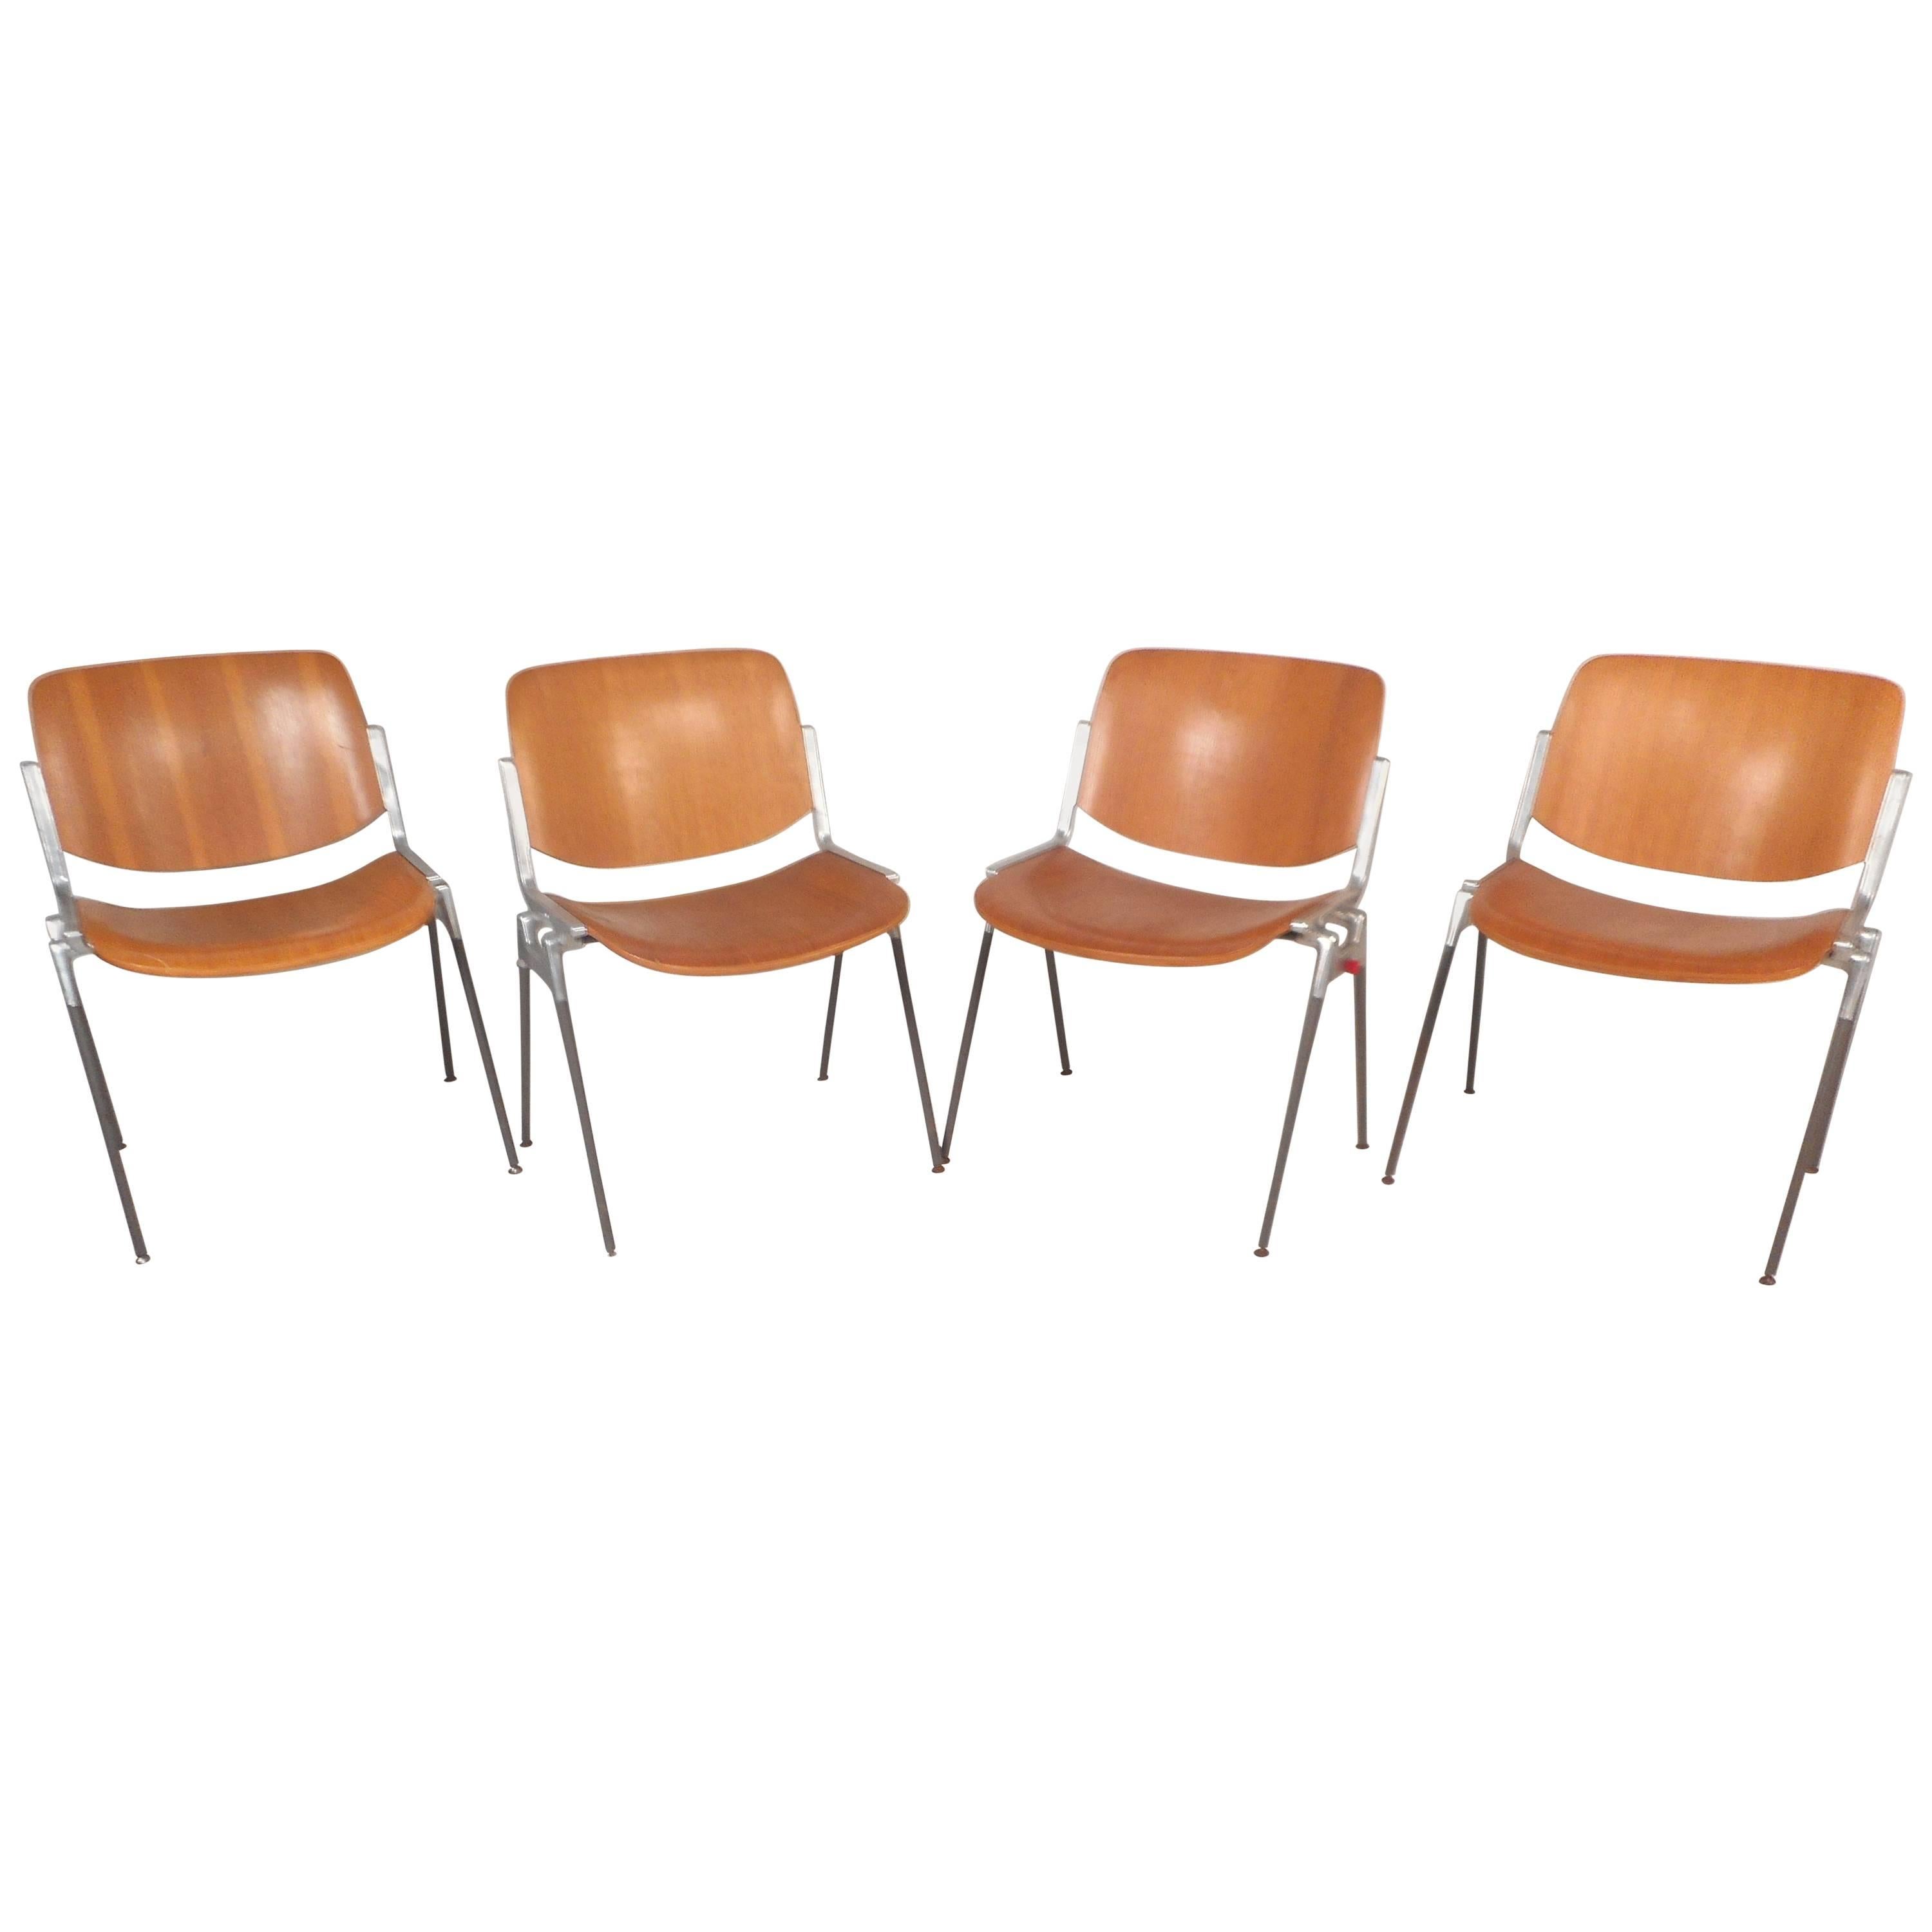 Set of Mid-Century Modern Italian Stacking Chairs by Giancarlo Piretti